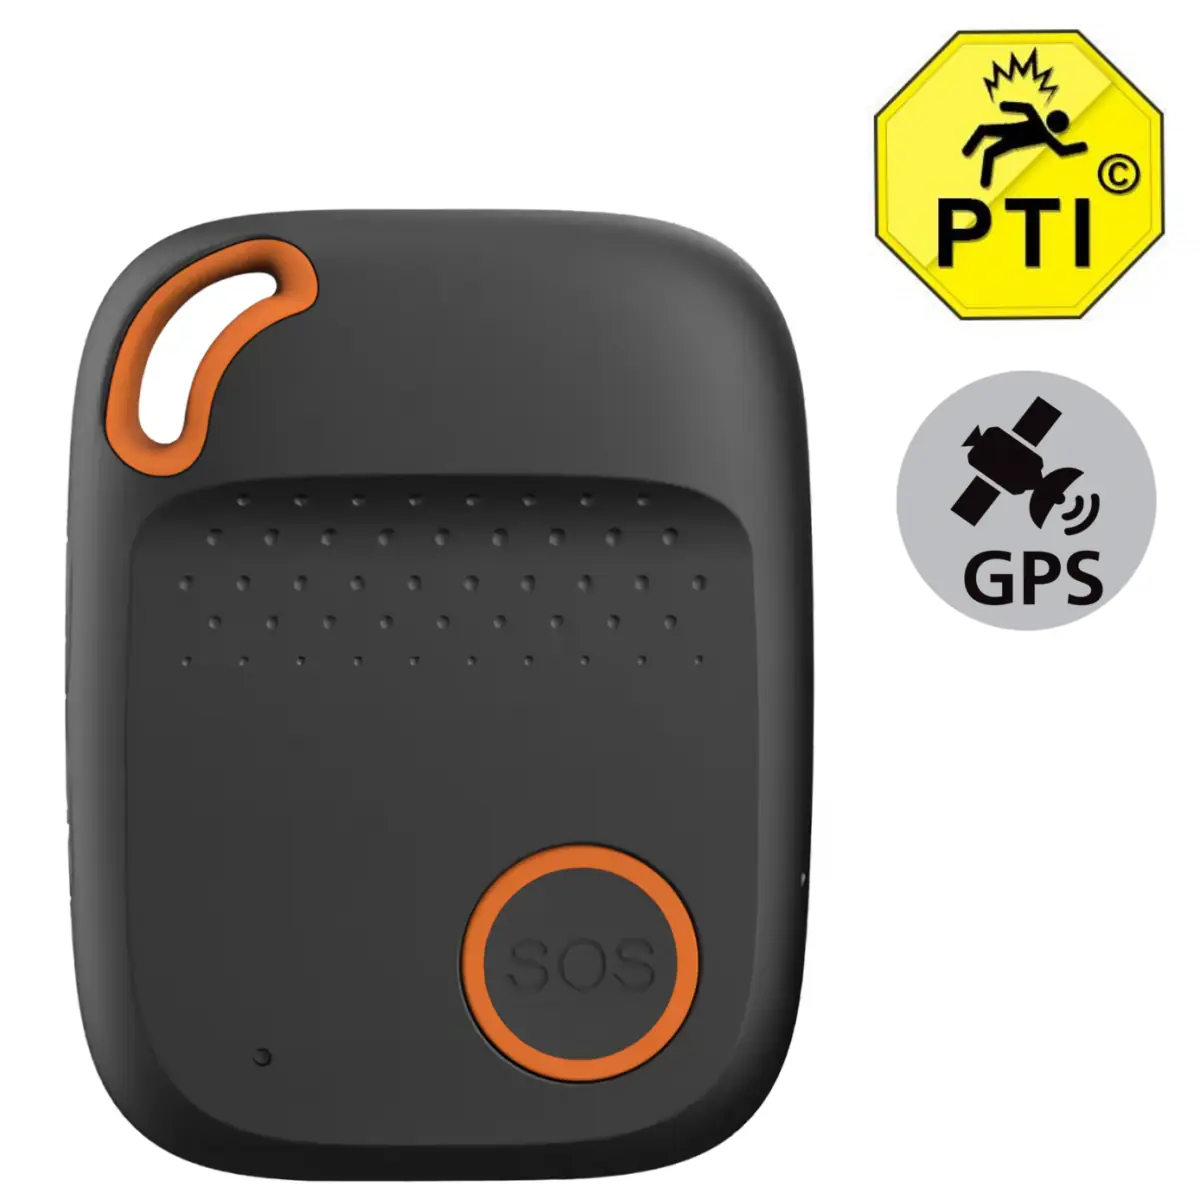 Vigicom ATI 401 GPS - BIW valdetectordoos met GPS